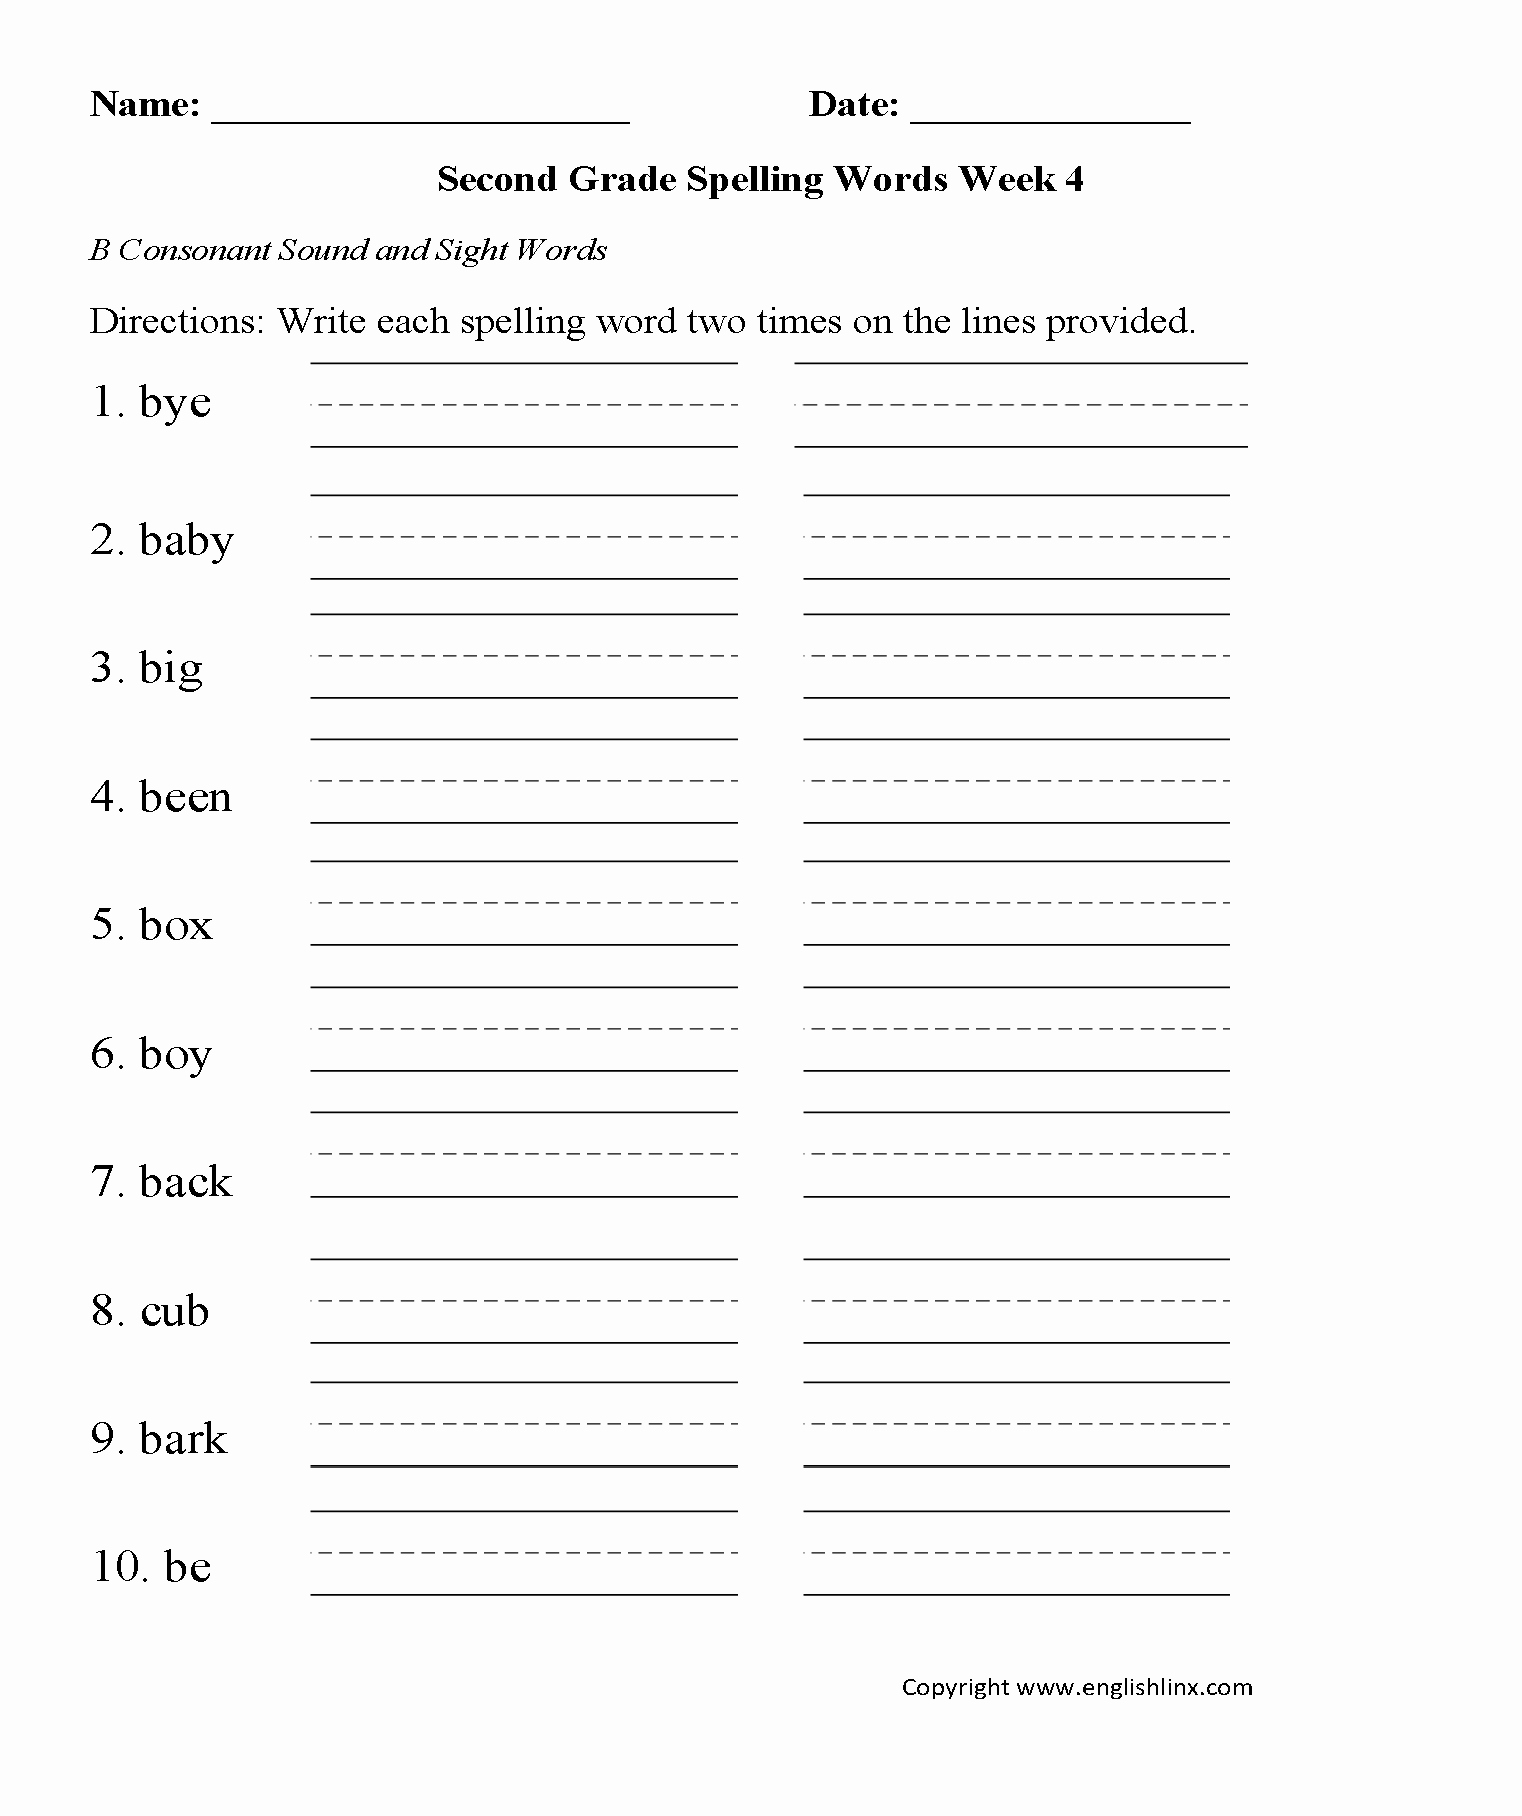 Second Grade Spelling Worksheets Awesome Spelling Worksheets